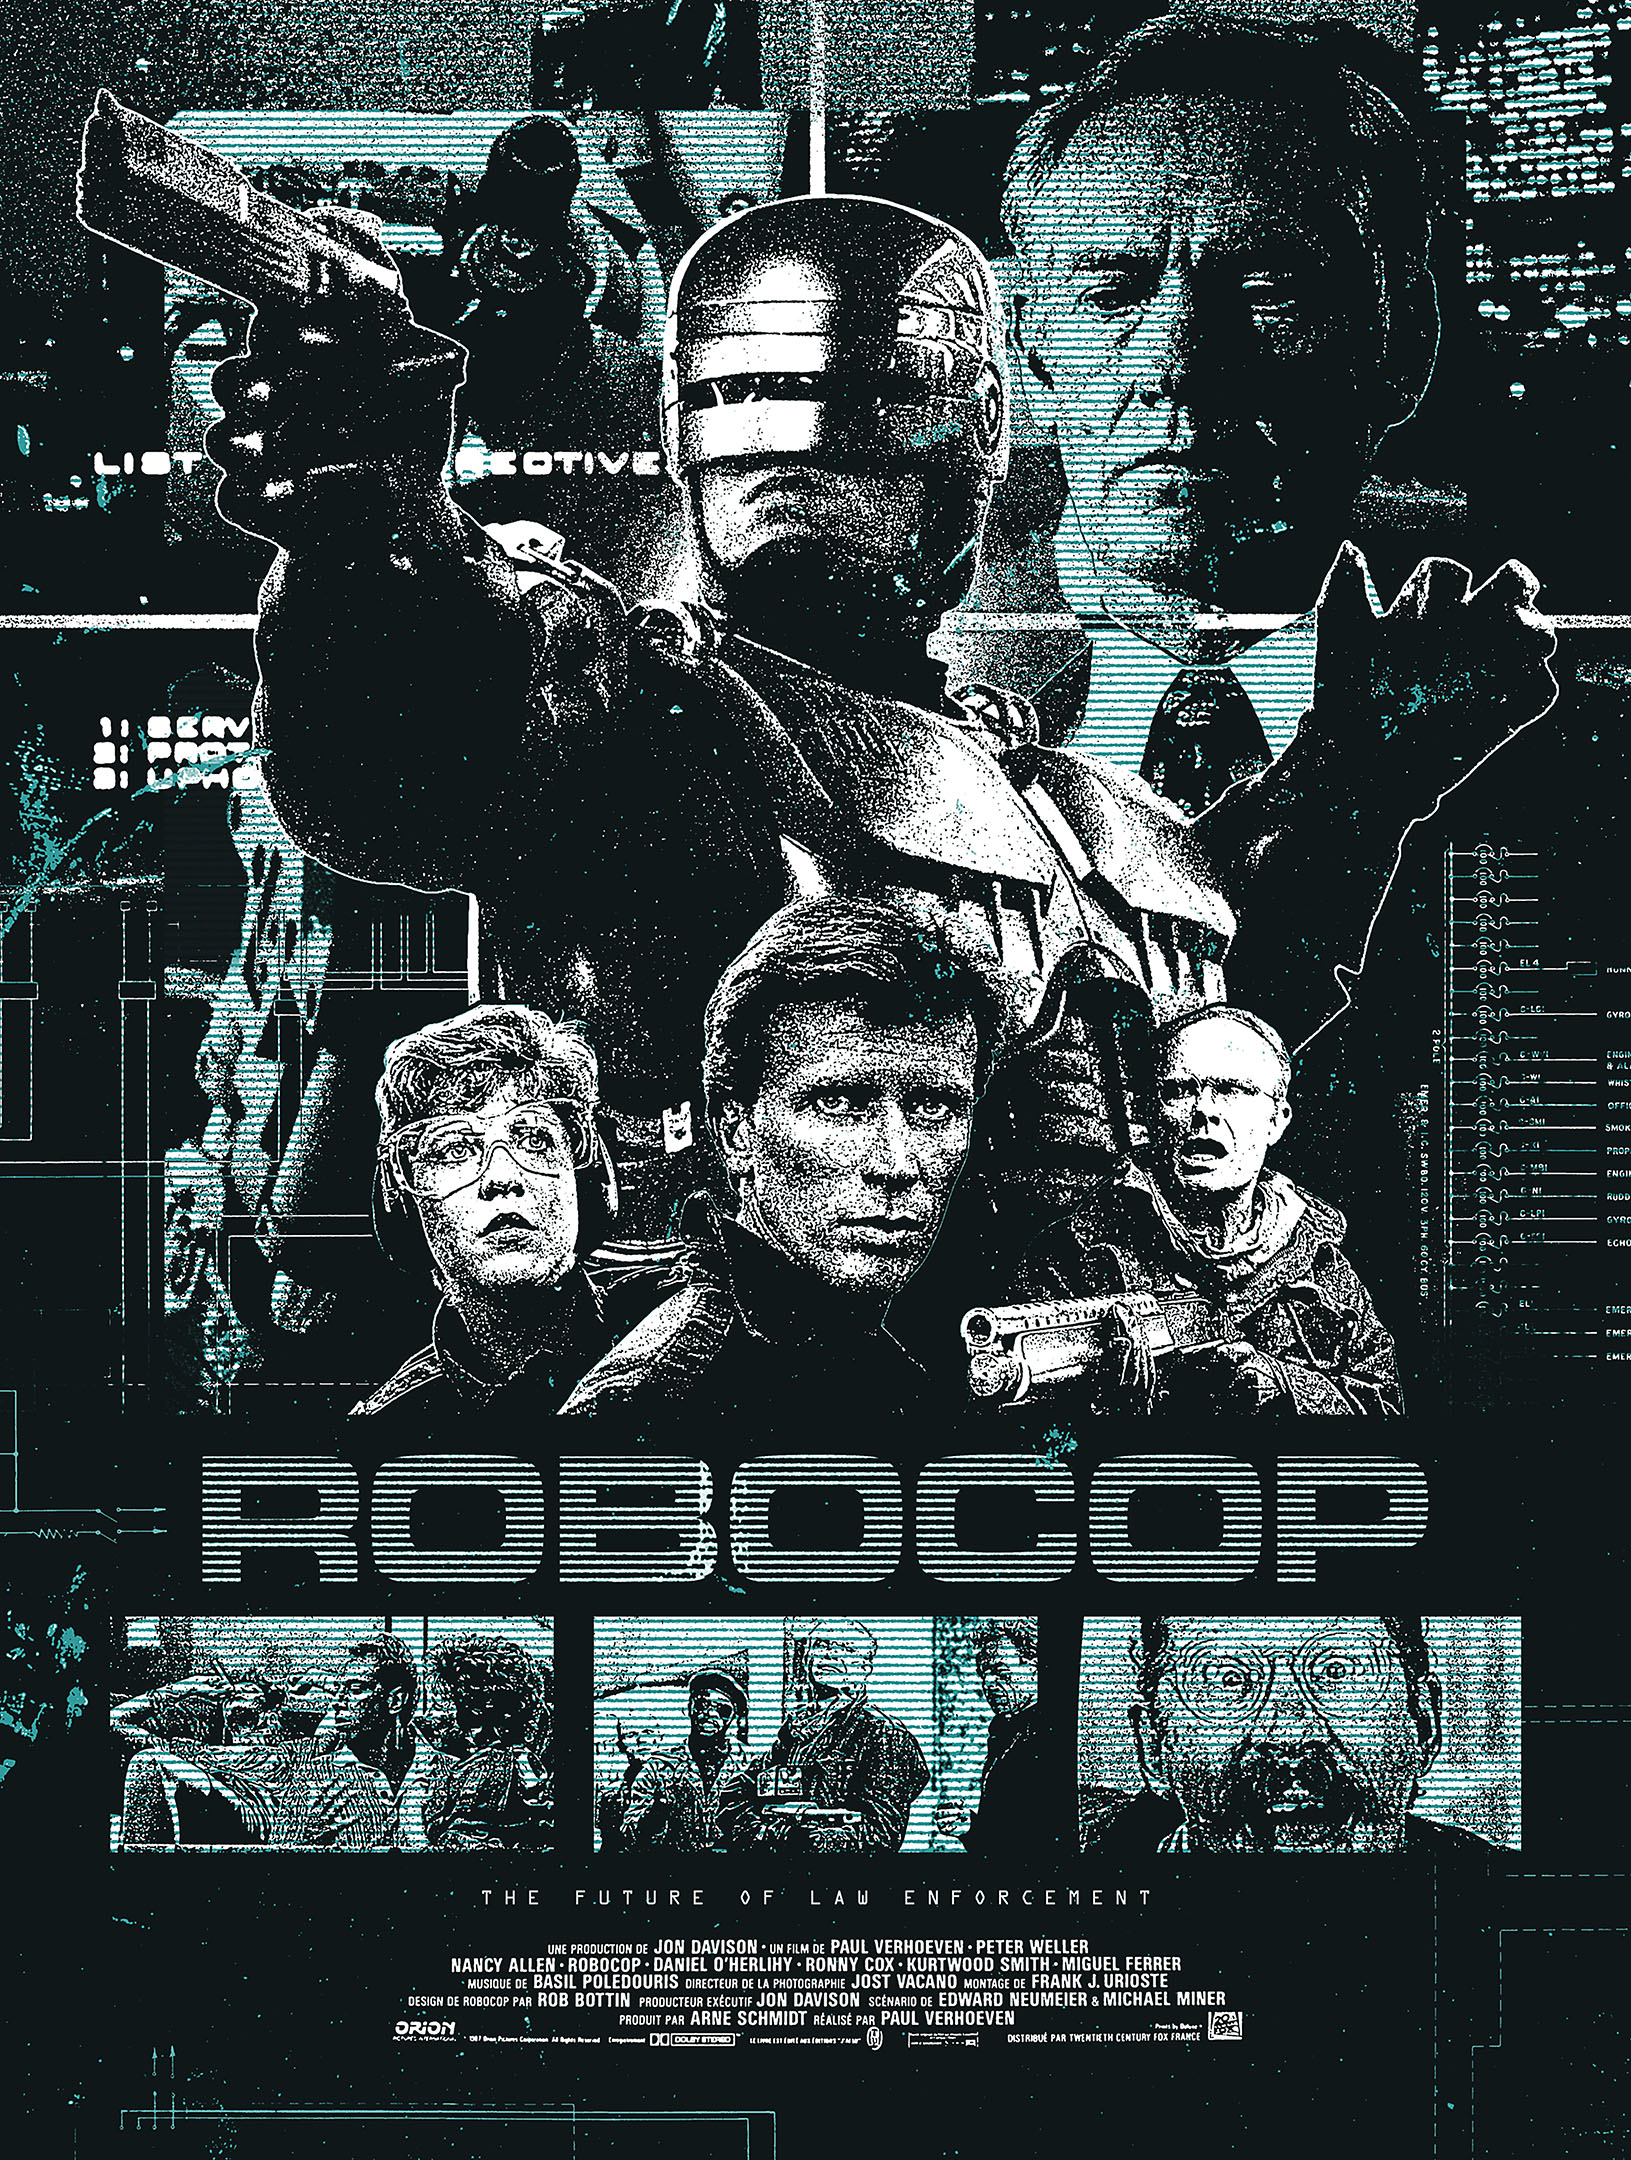 robocop 1987 movie poster